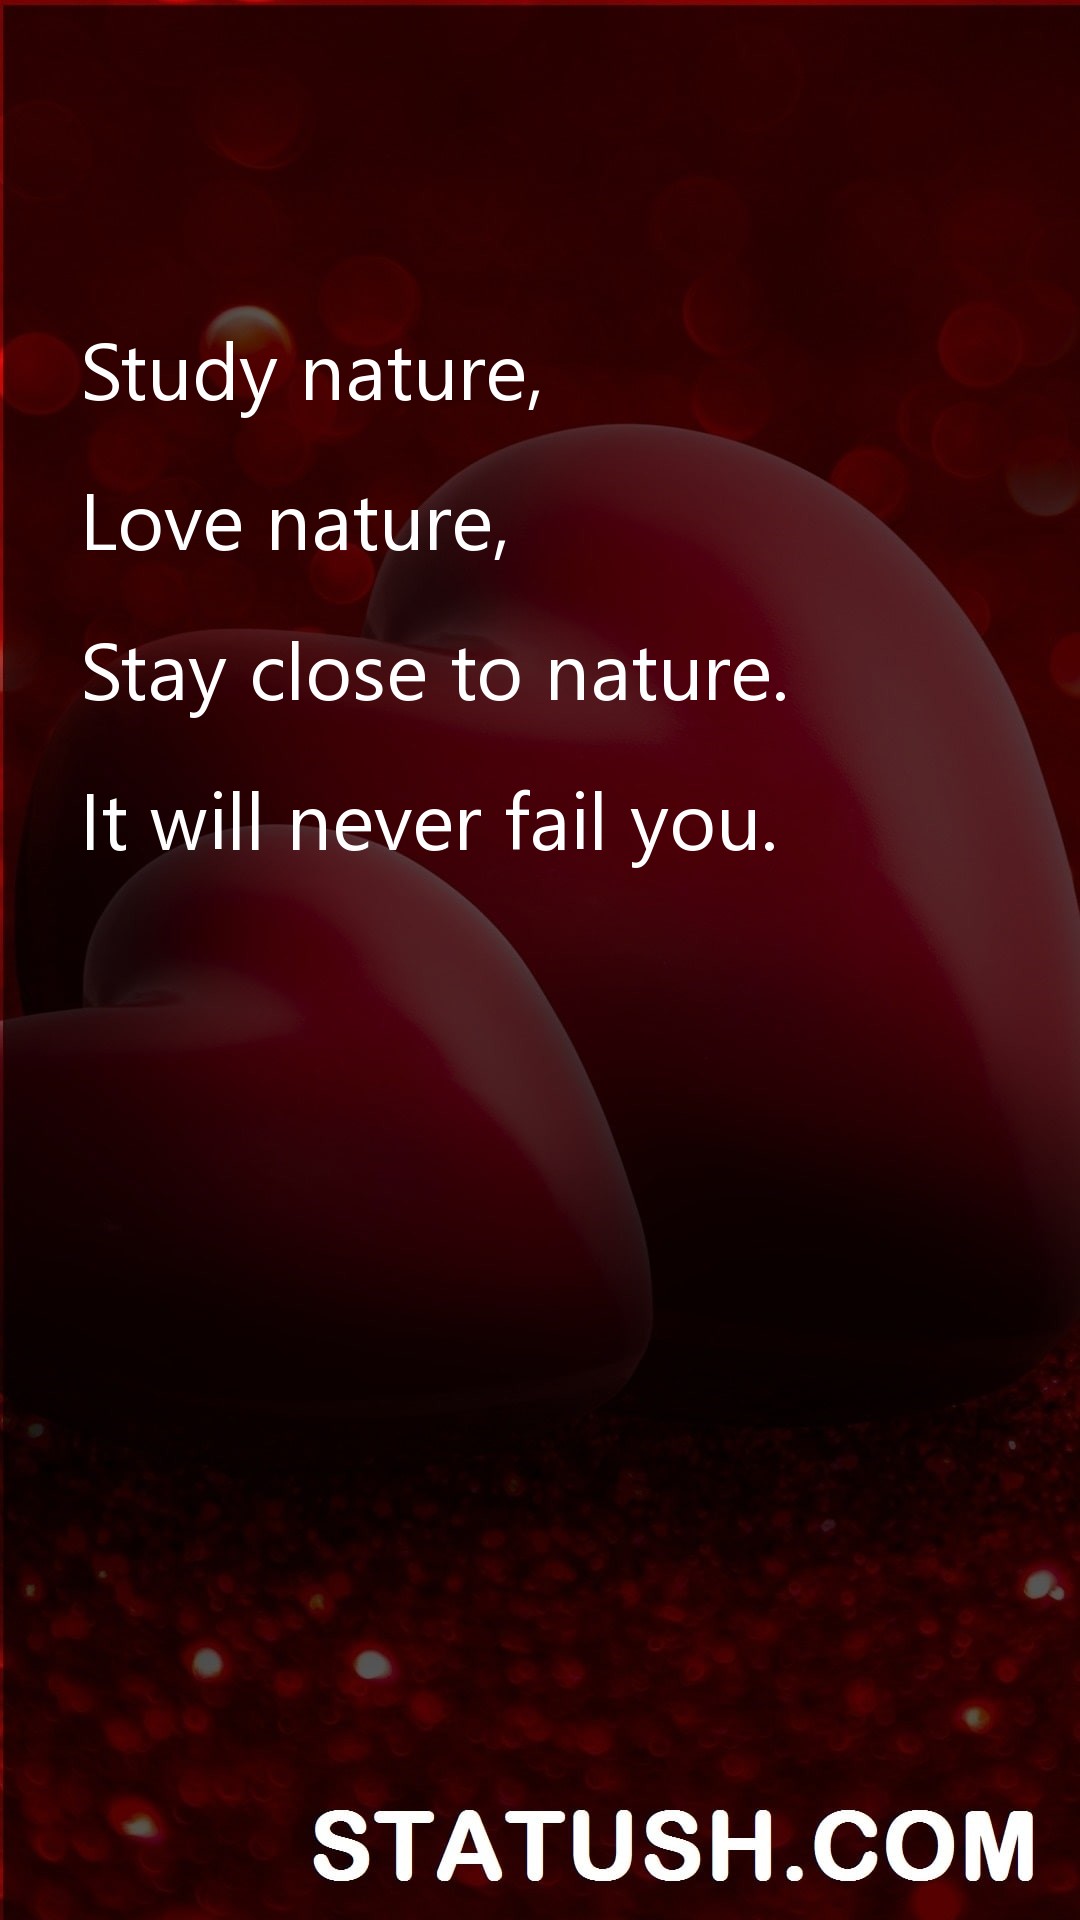 Study nature love nature - Love Quotes at statush.com